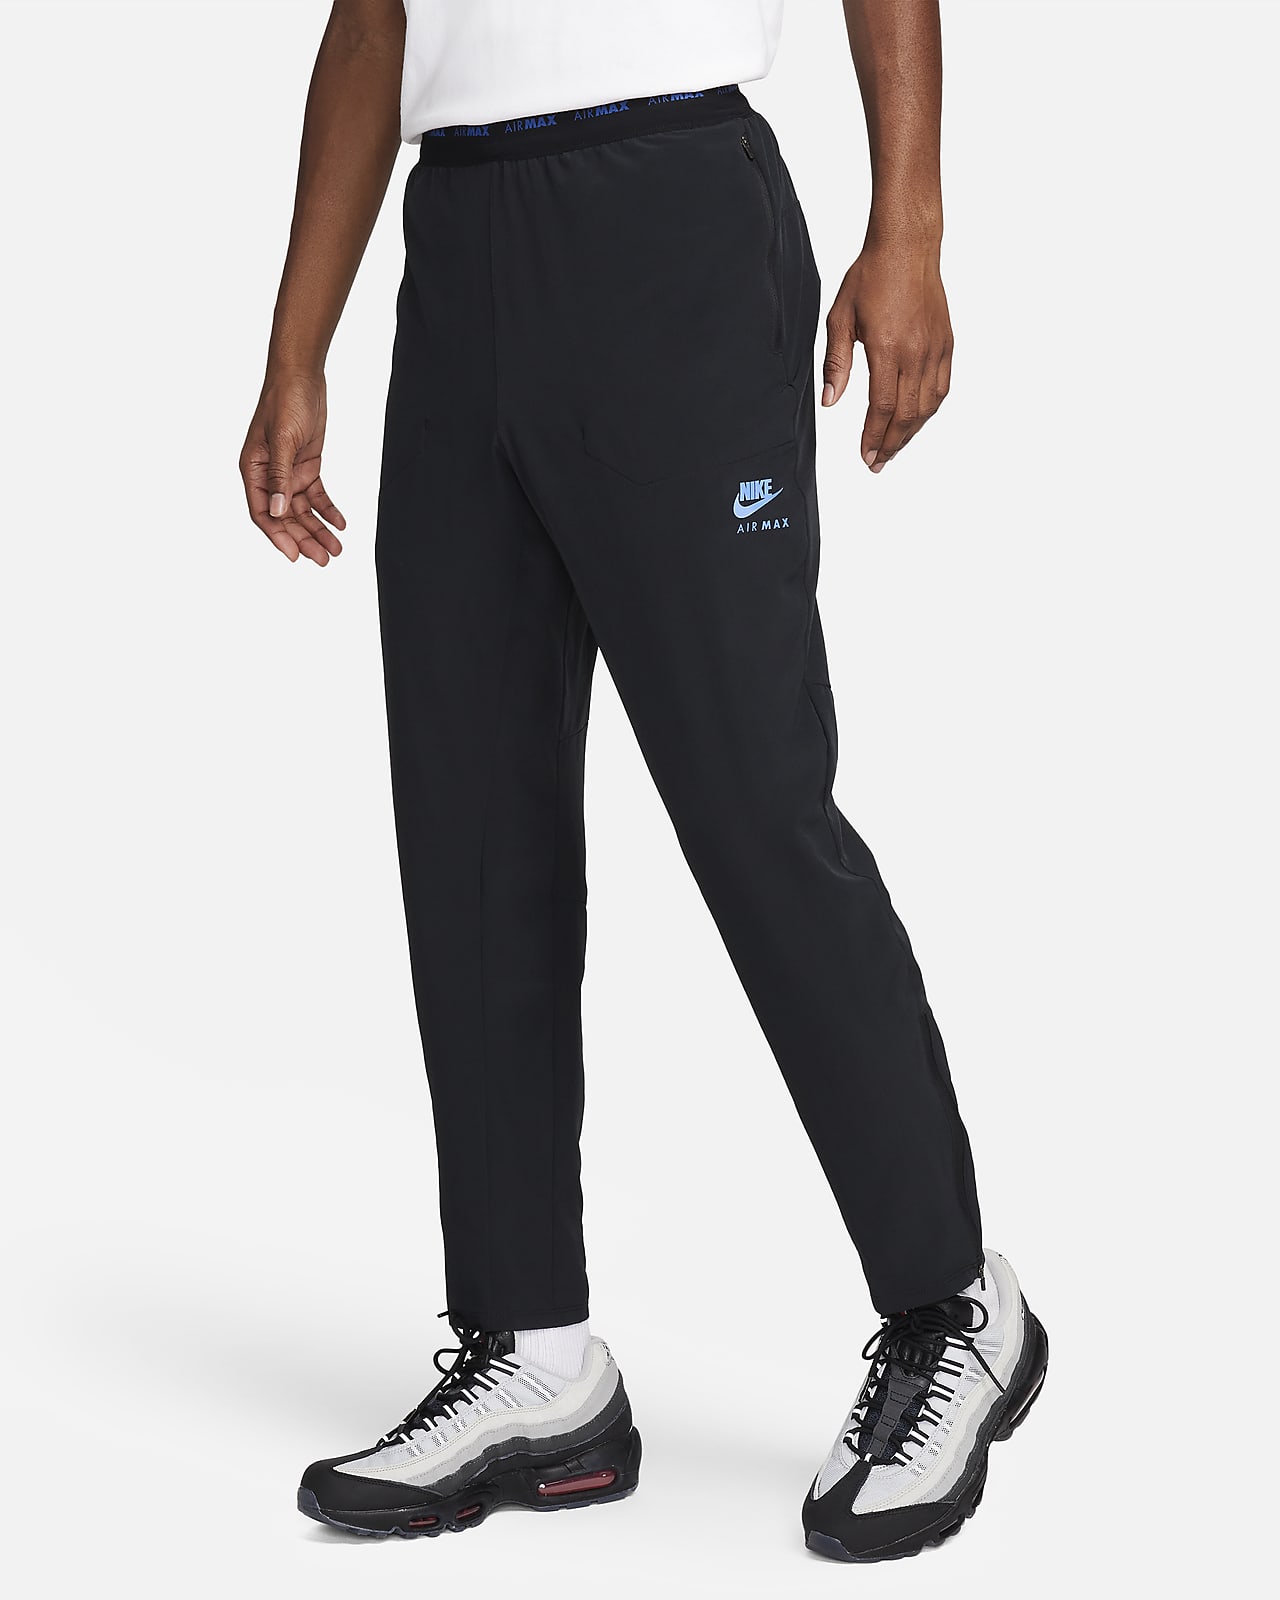 Nike Air Max Men's Dri-FIT Woven Trousers